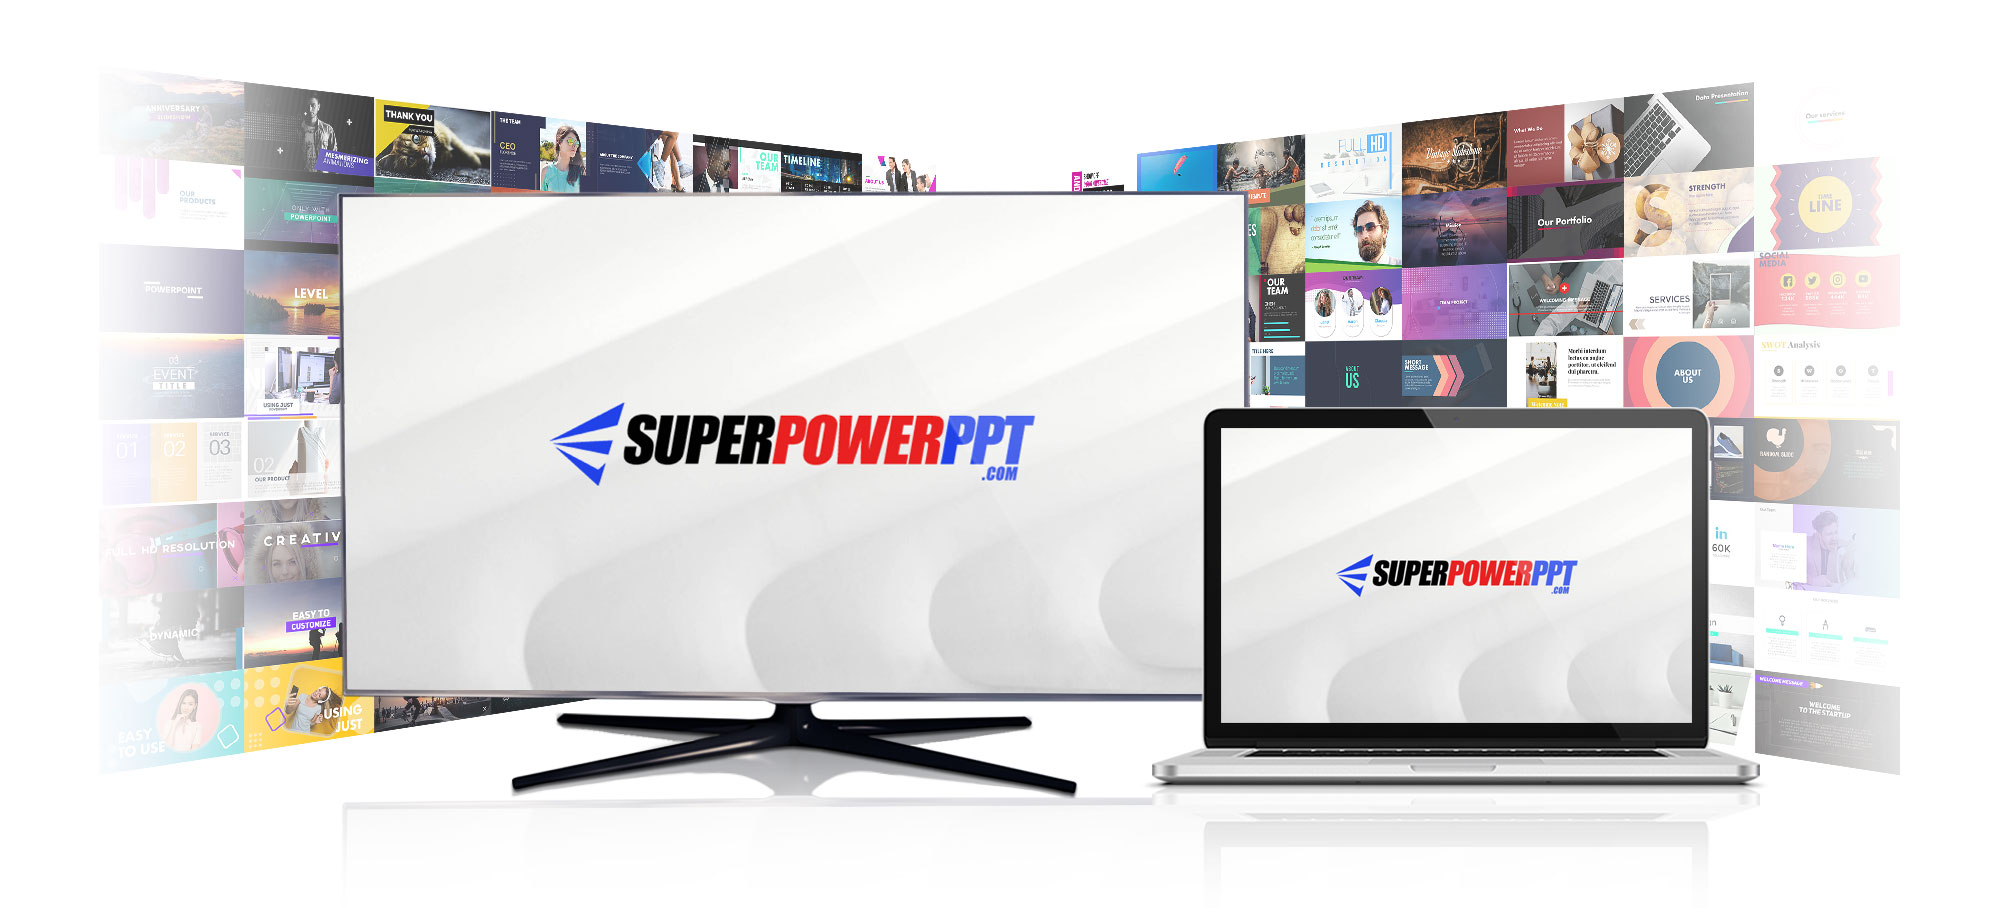 SuperPowerPPT Review